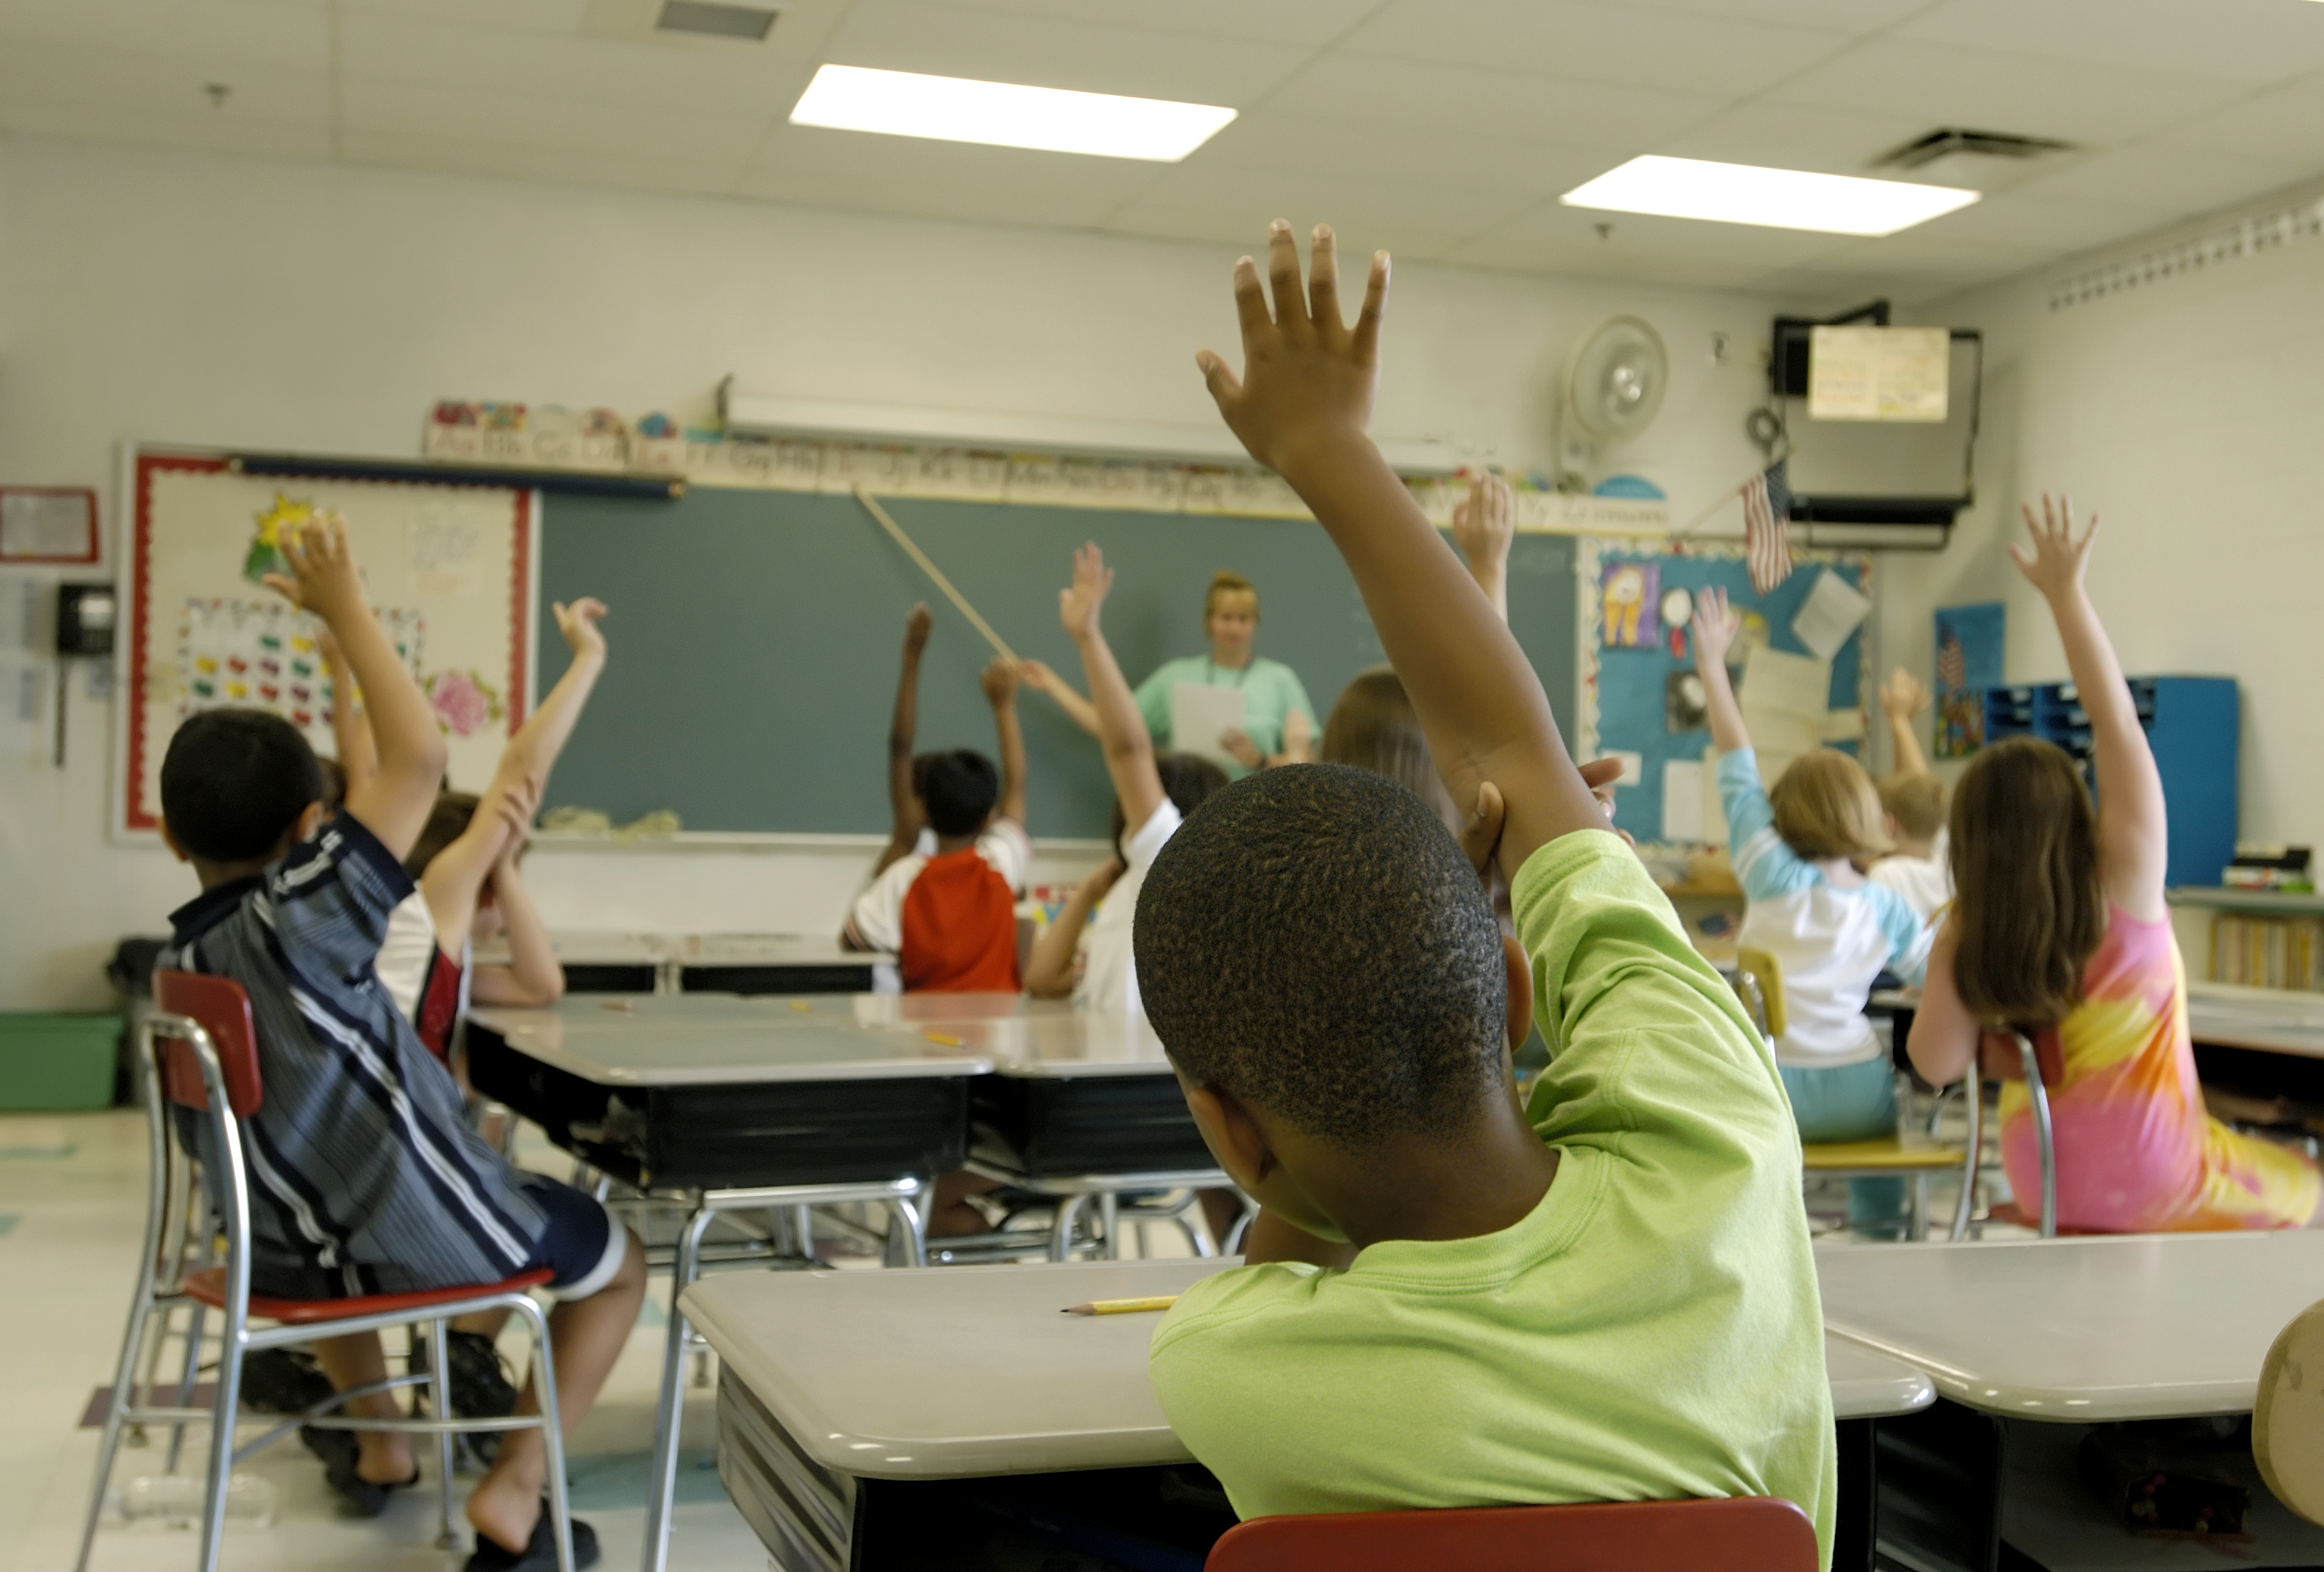 Children raise their hands in the classroom.